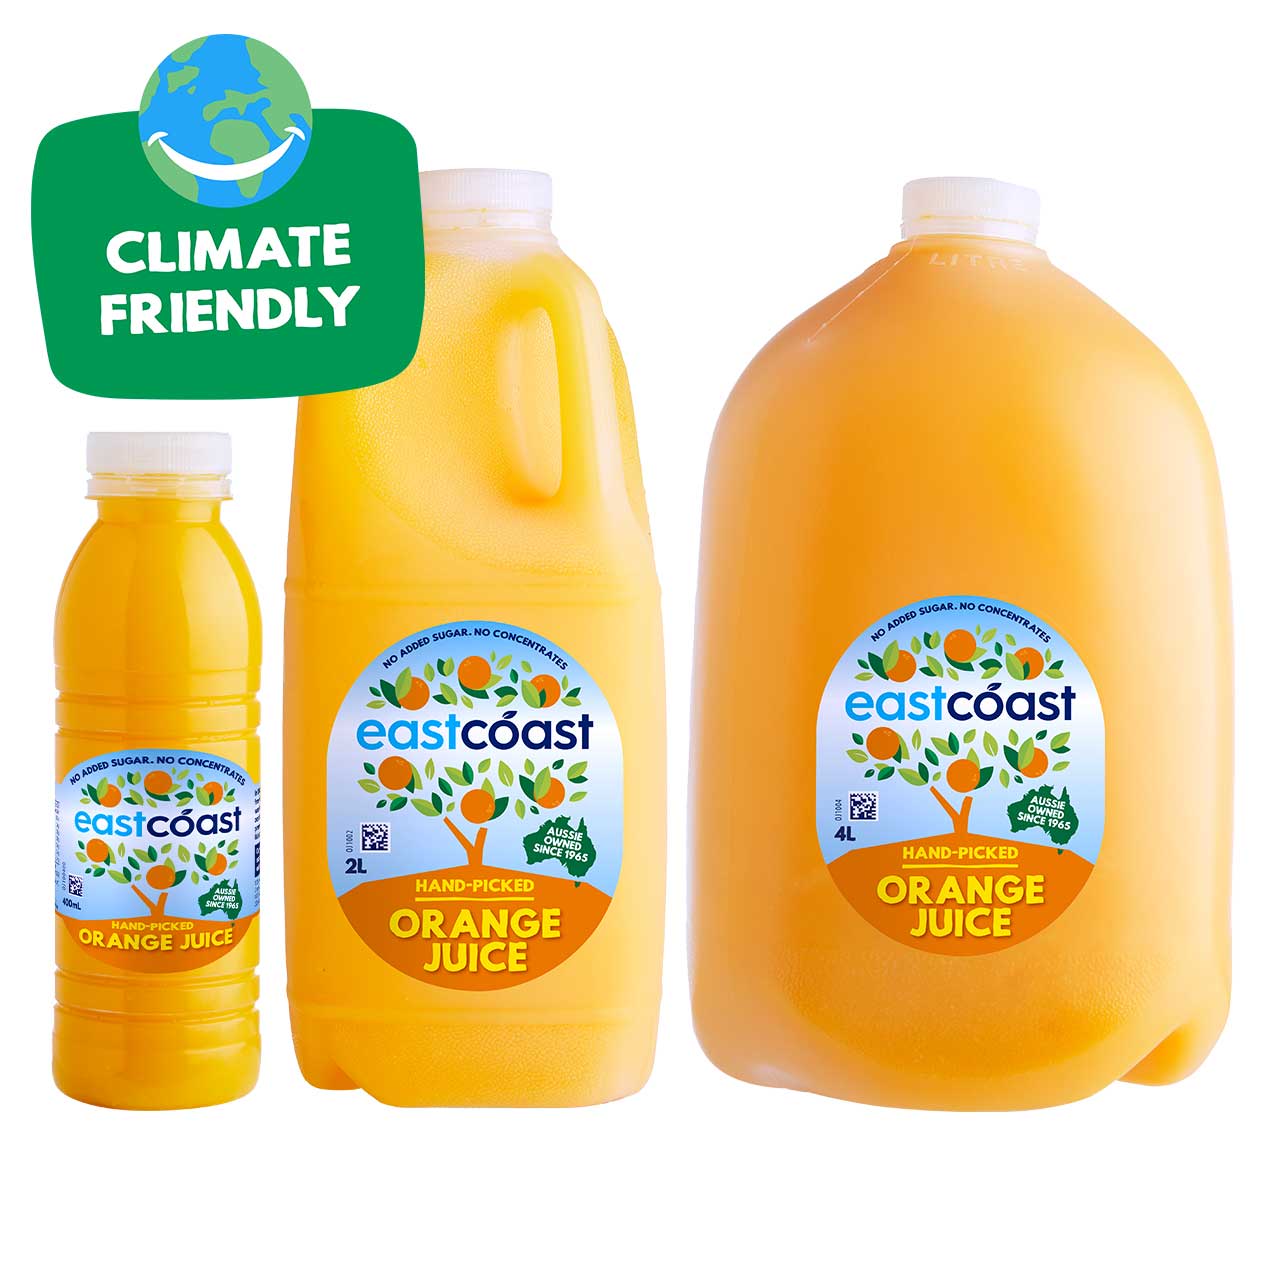 https://eastcoastbeverages.com.au/wp-content/uploads/eastcoast-orange-juice.jpg